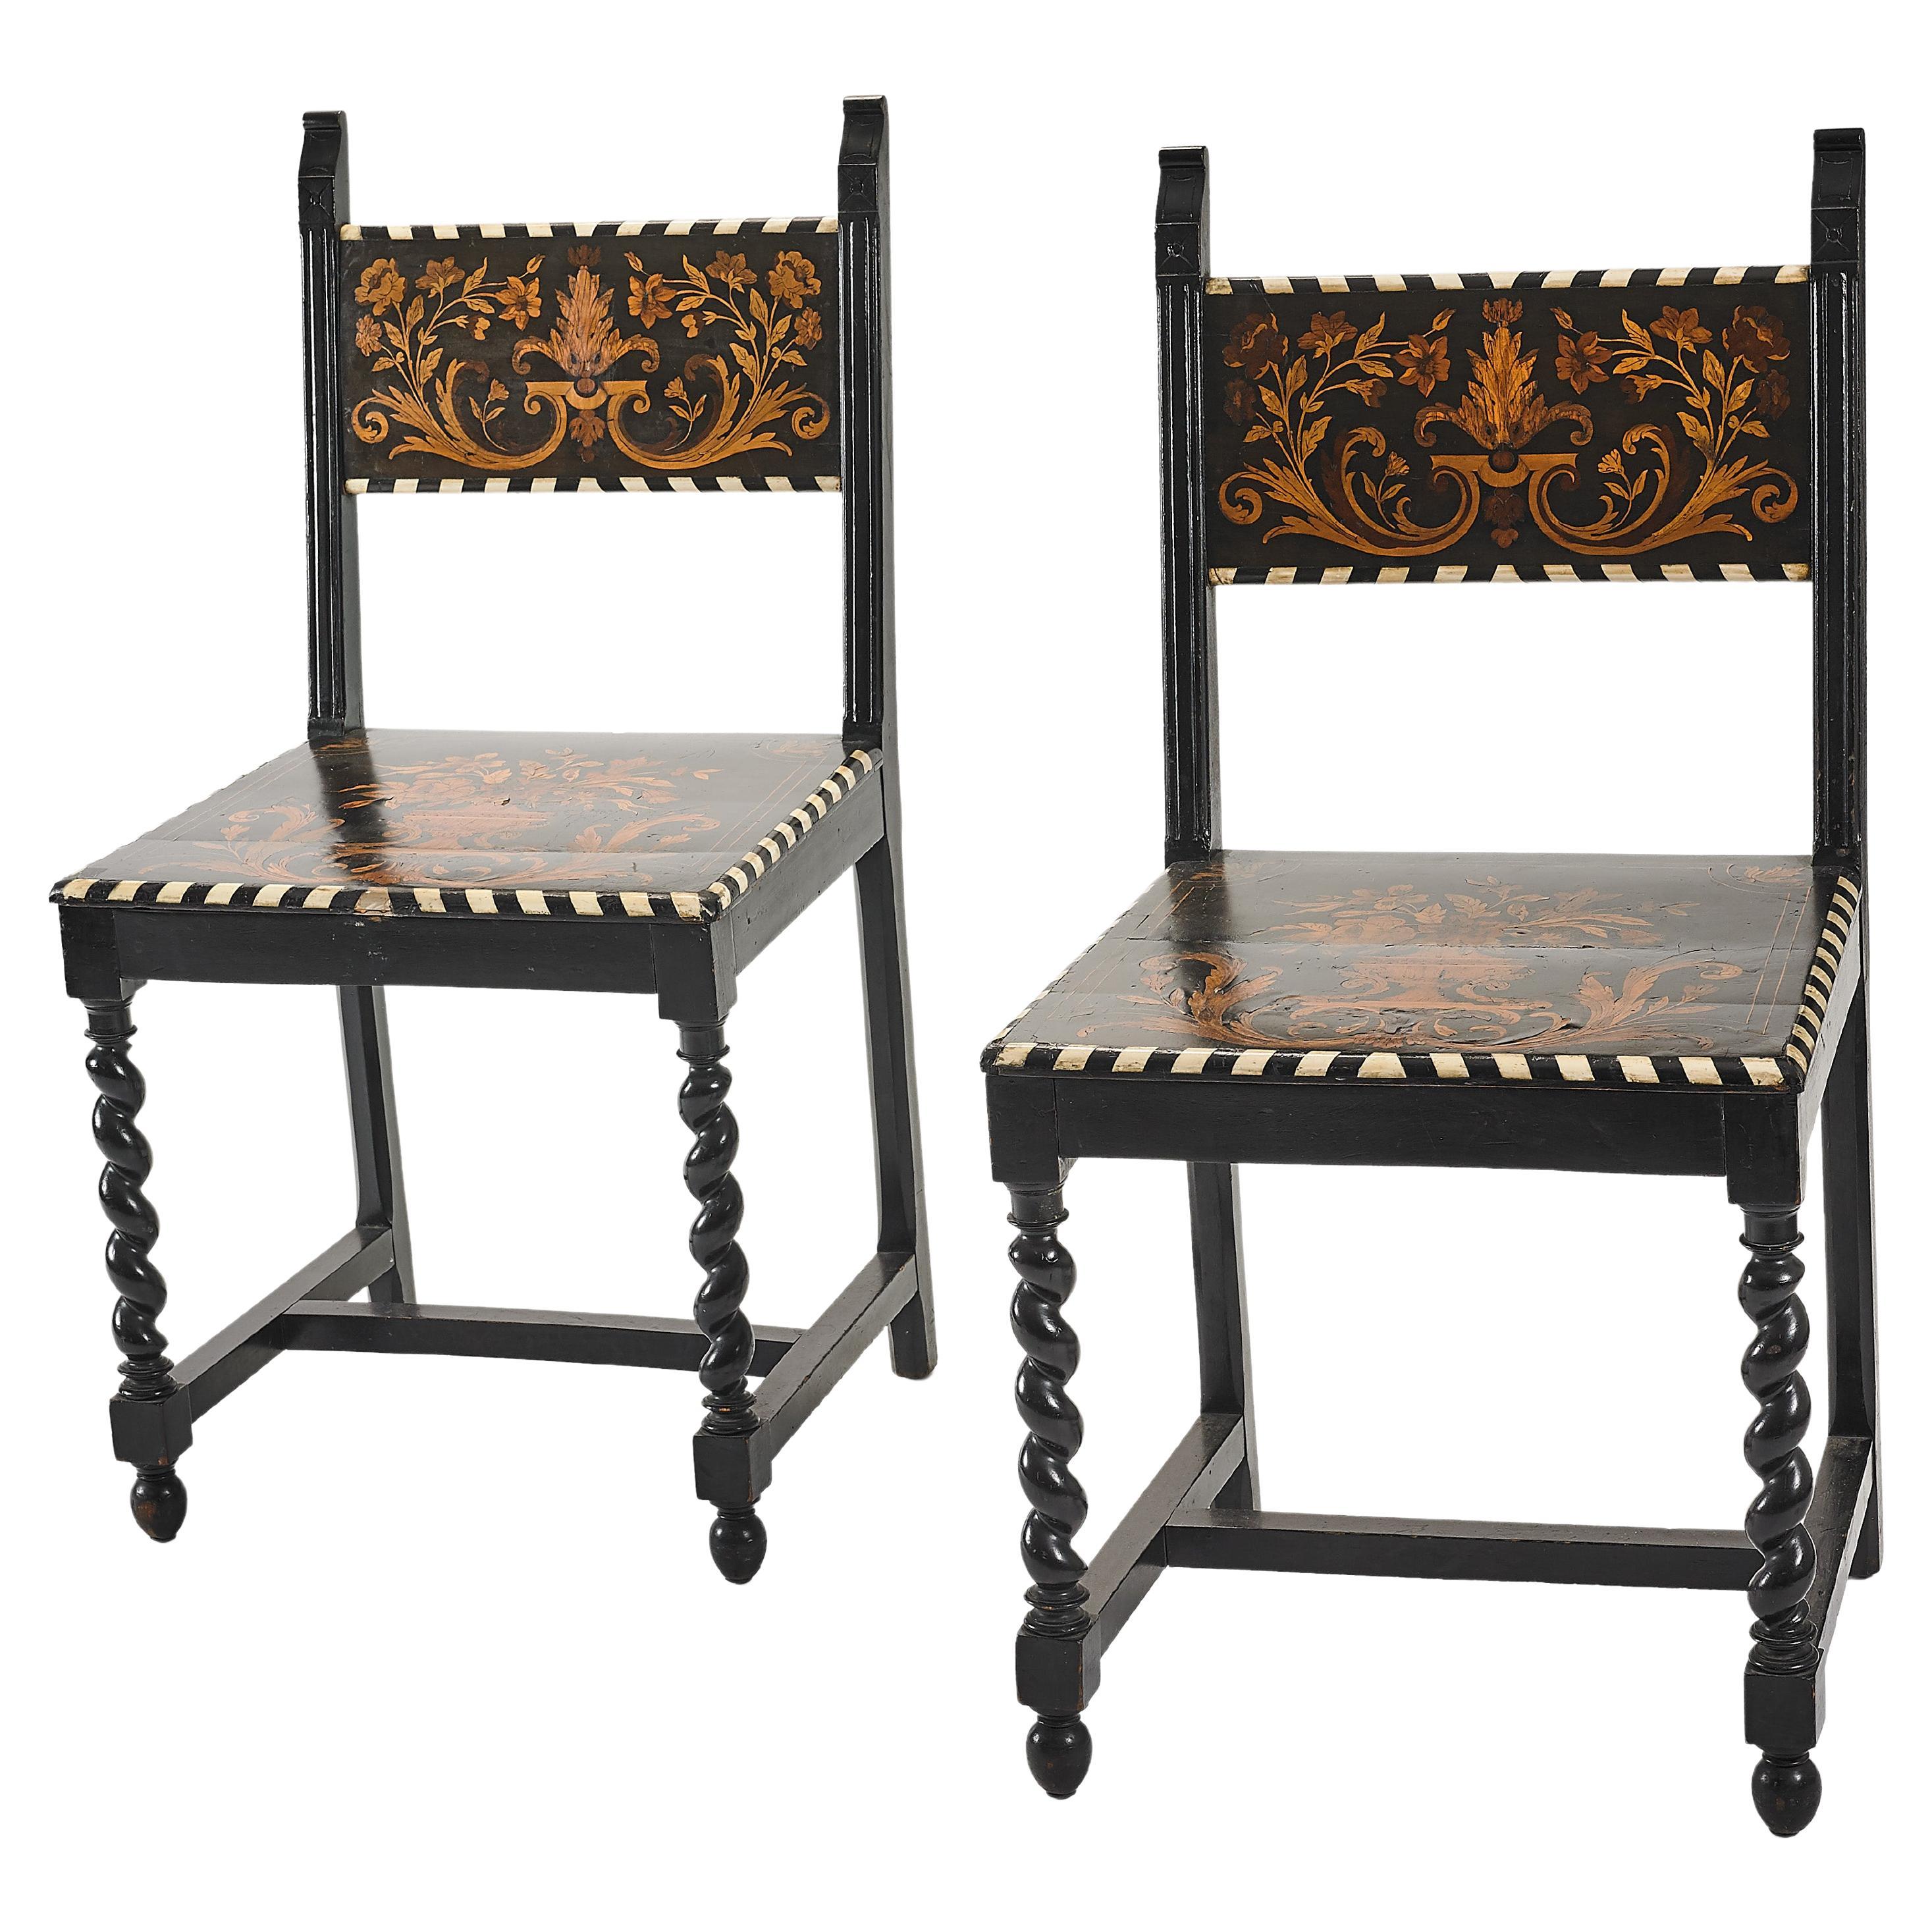 Italian Renaissance Style Inlaid Chairs, 'Pair'